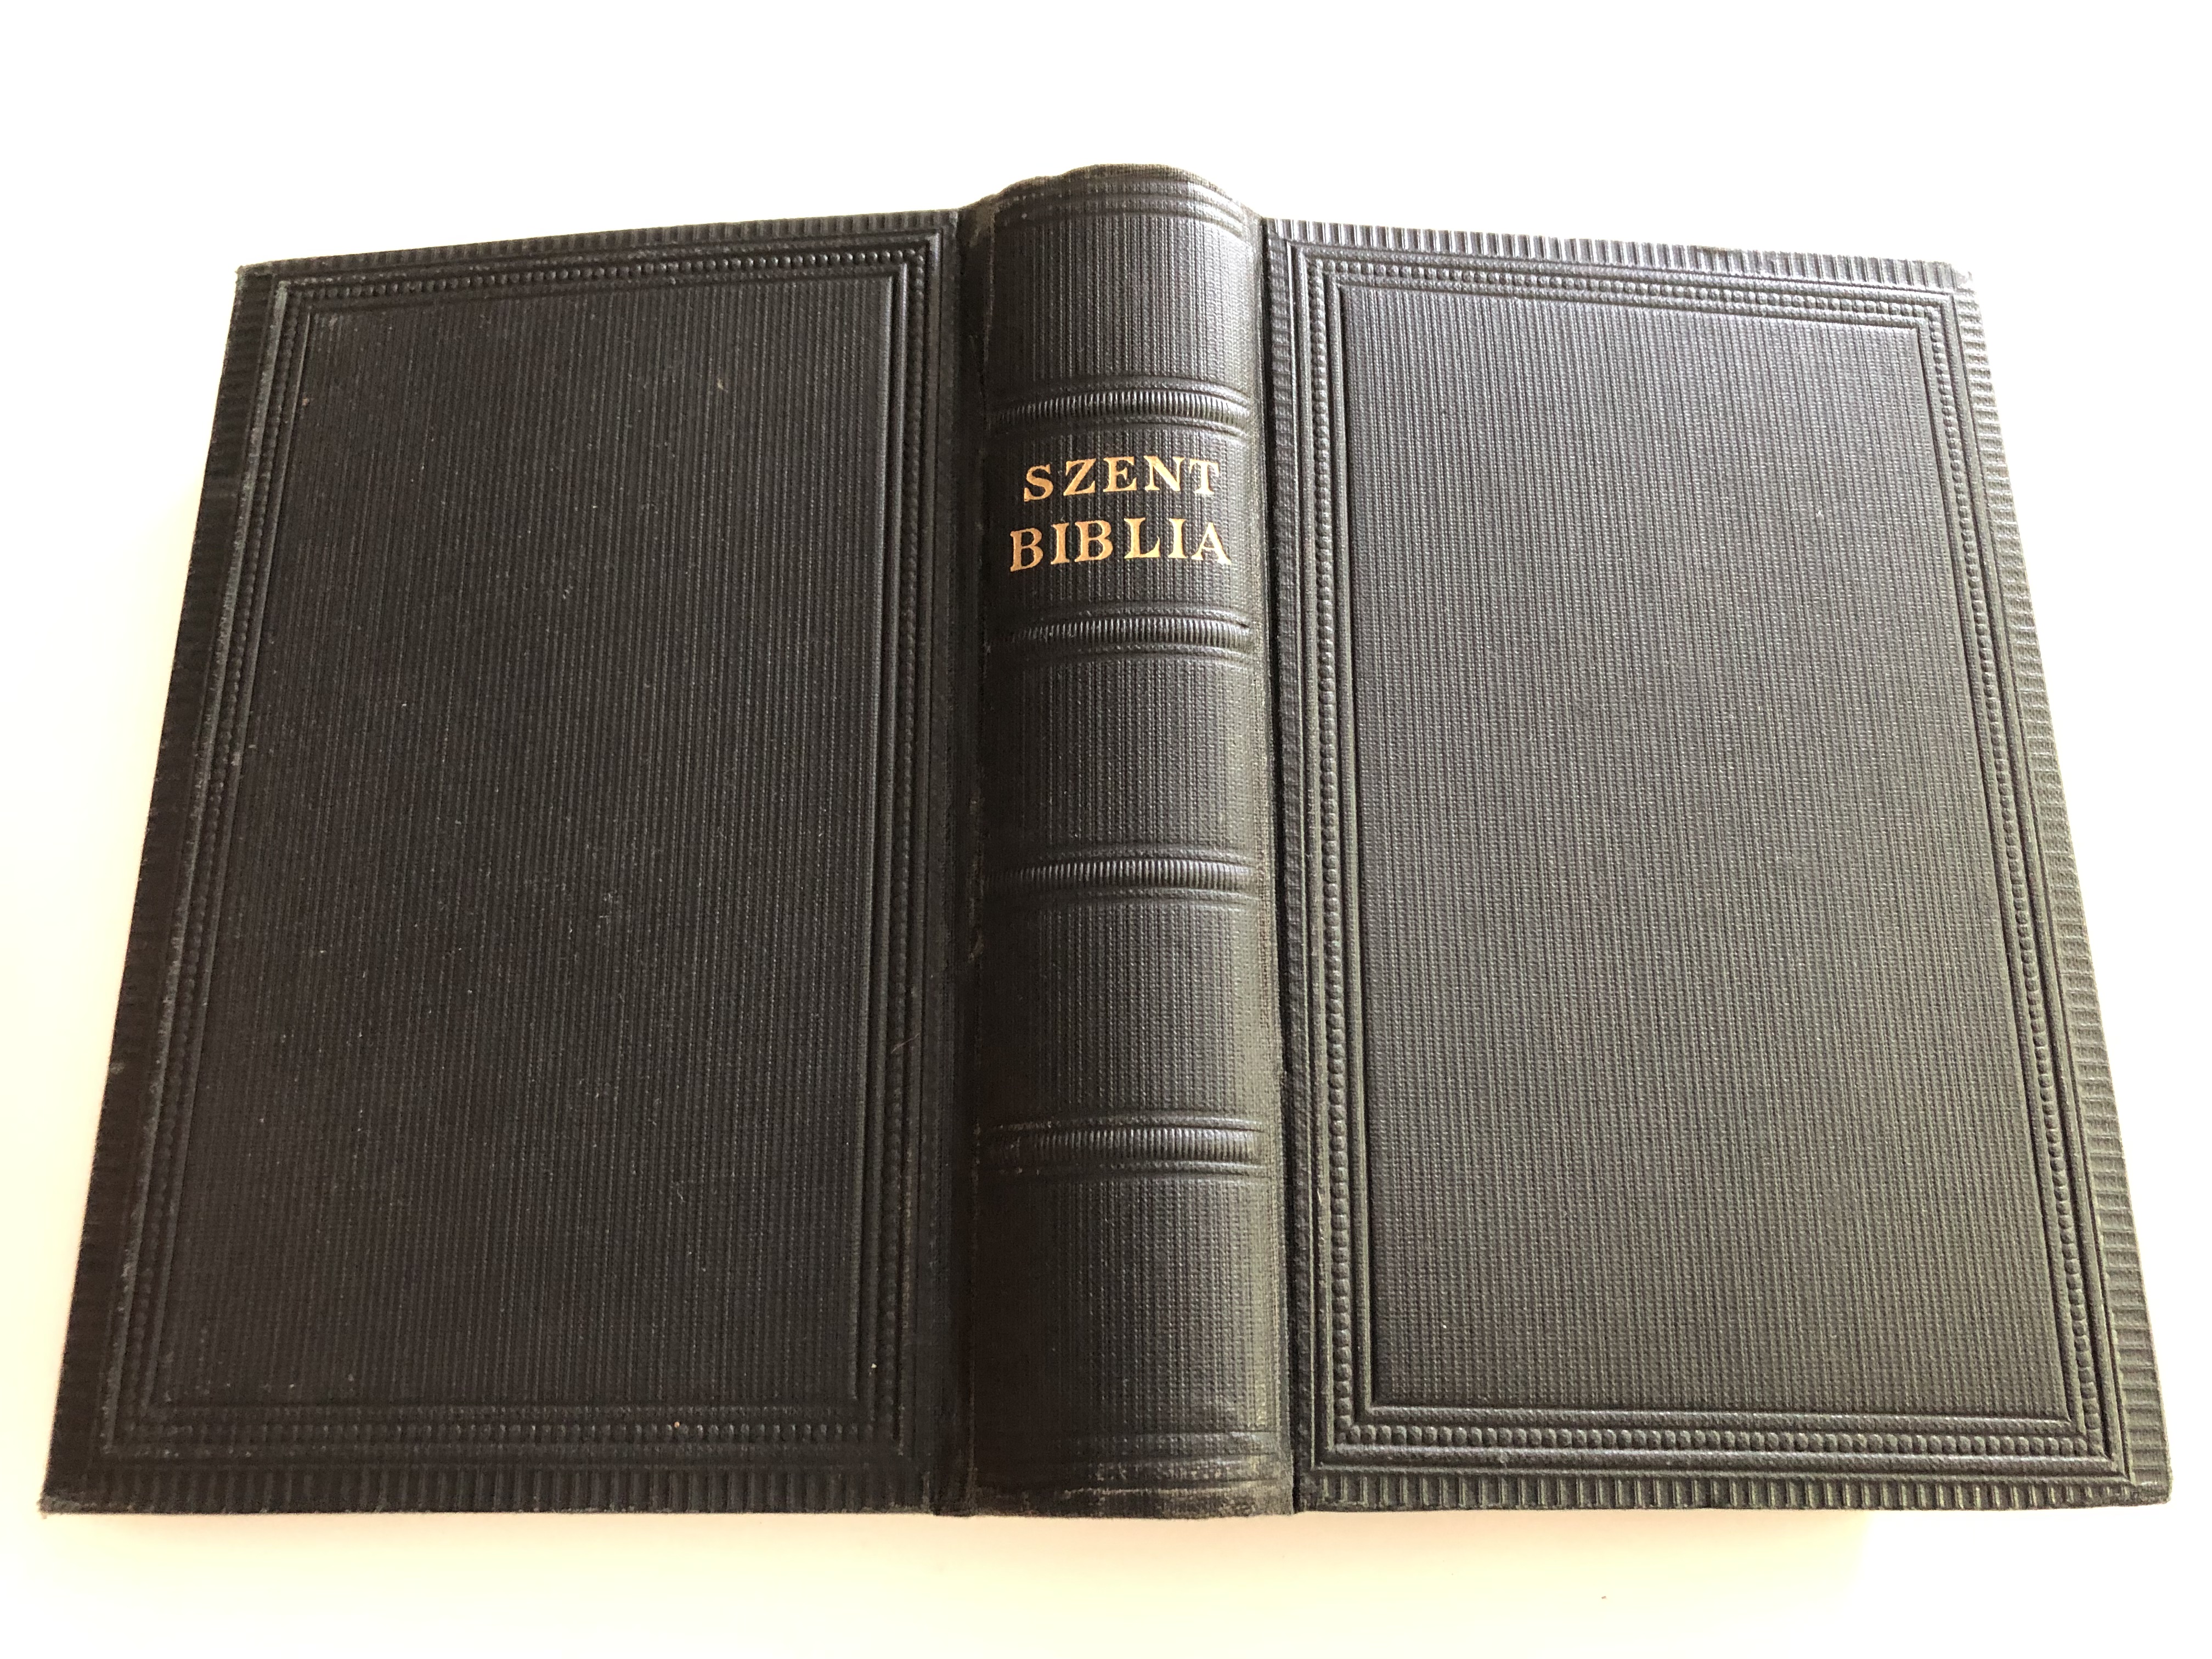 hungarian-holy-bible-szent-biblia-istennek-s-j-testamentom-ban-foglaltatott-eg-sz-szent-r-s-british-bible-society-1938-k-roli-g-sp-r-translation-hardcover-15-.jpg